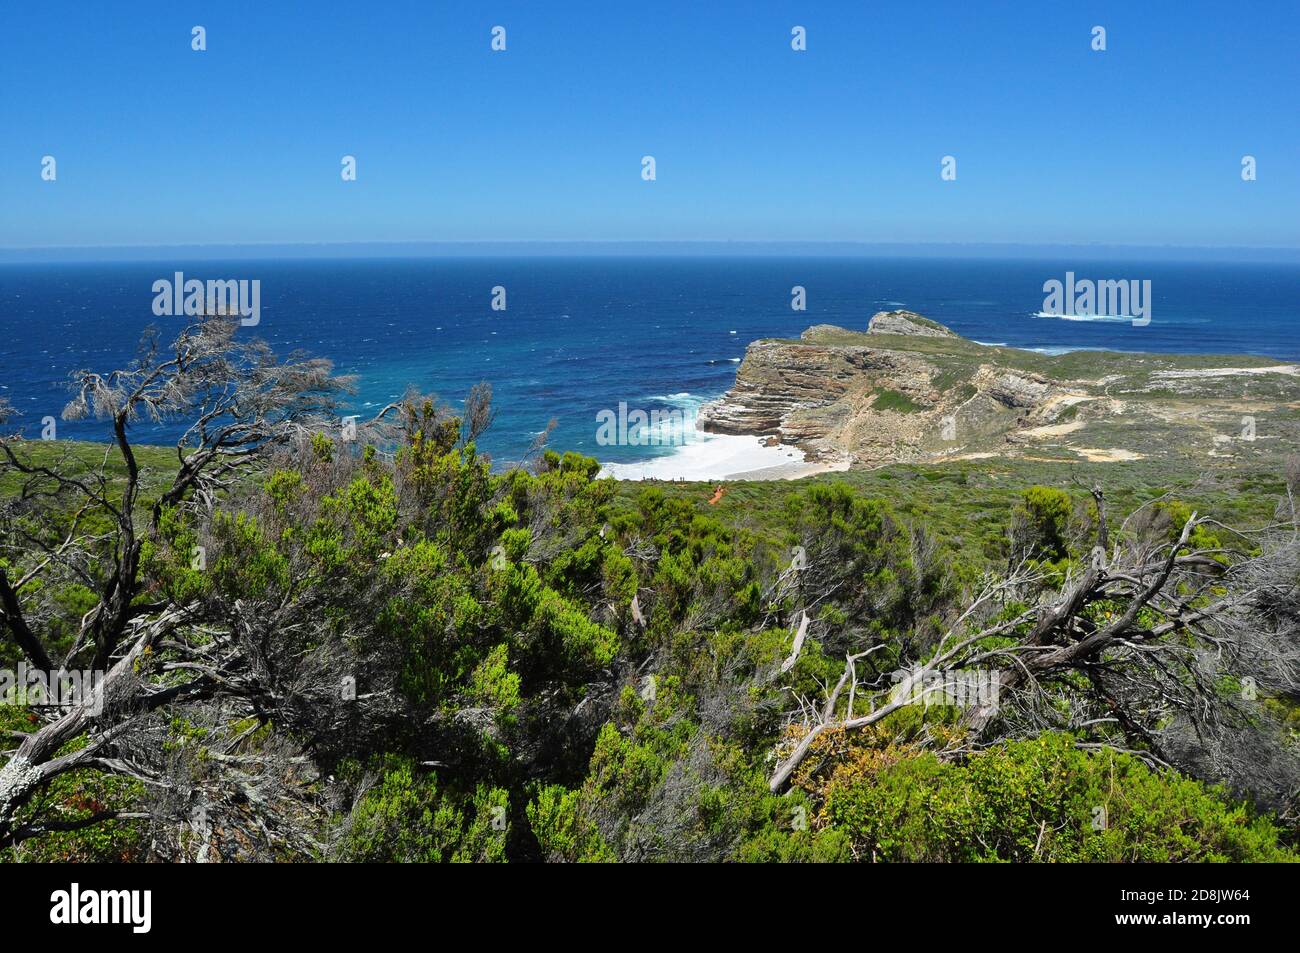 Cape of Good Hope and Dias beach, Cape peninsula, South Africa Stock Photo